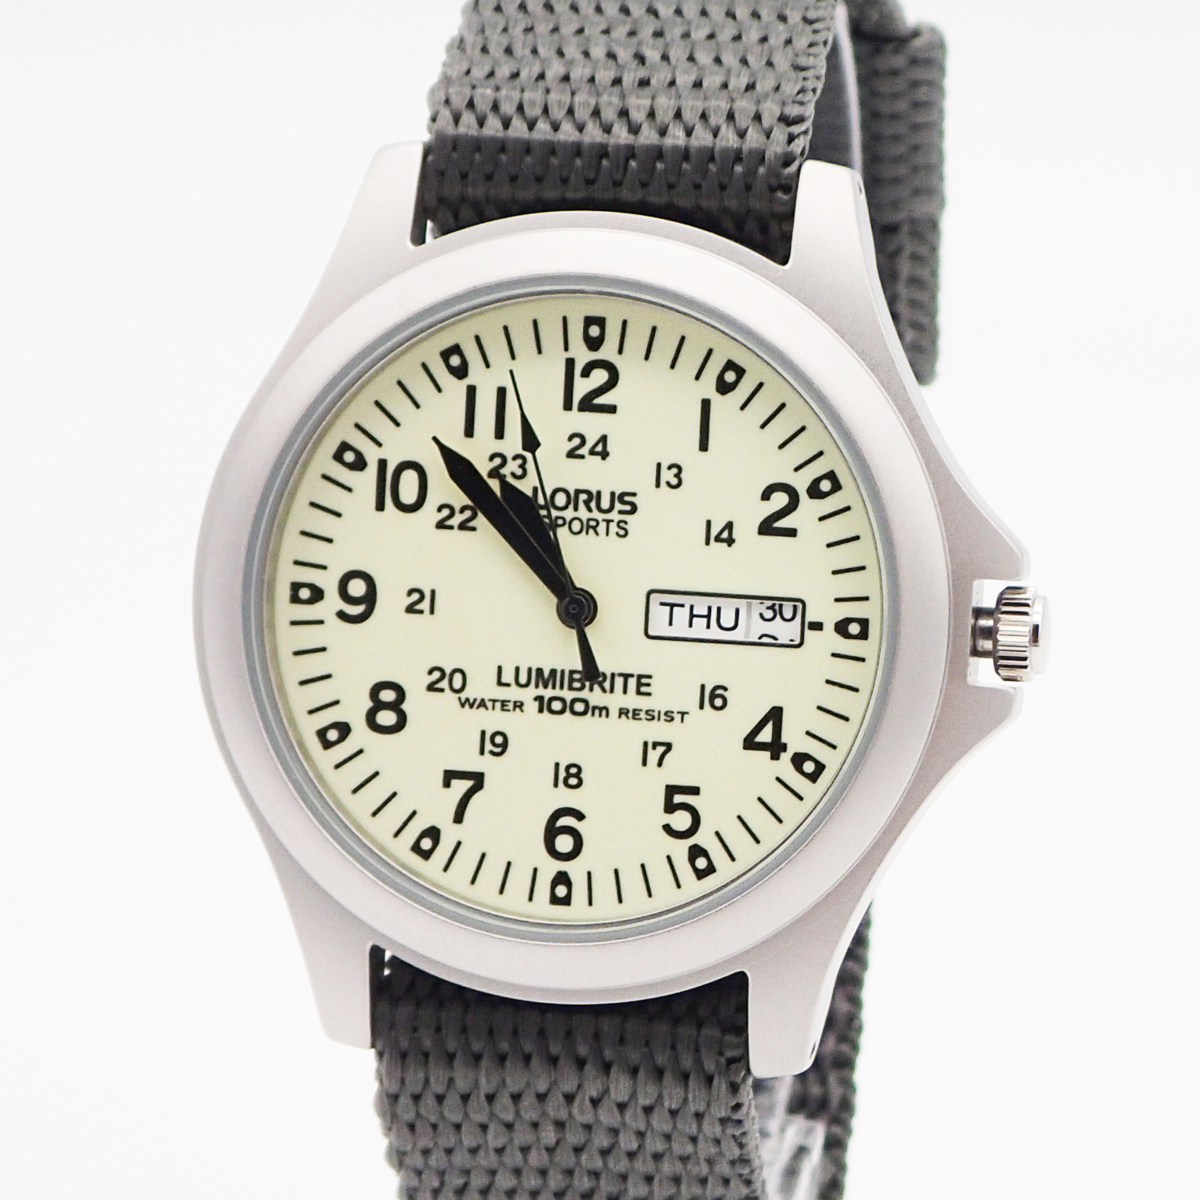 SEIKO LORUS Quartz Lumibrite Military Watch セイコー ローラス クオーツ ルミブライト グレー ミリタリー ウォッチ 100m防水 腕時計_※前回出品時に撮影した同型商品です。